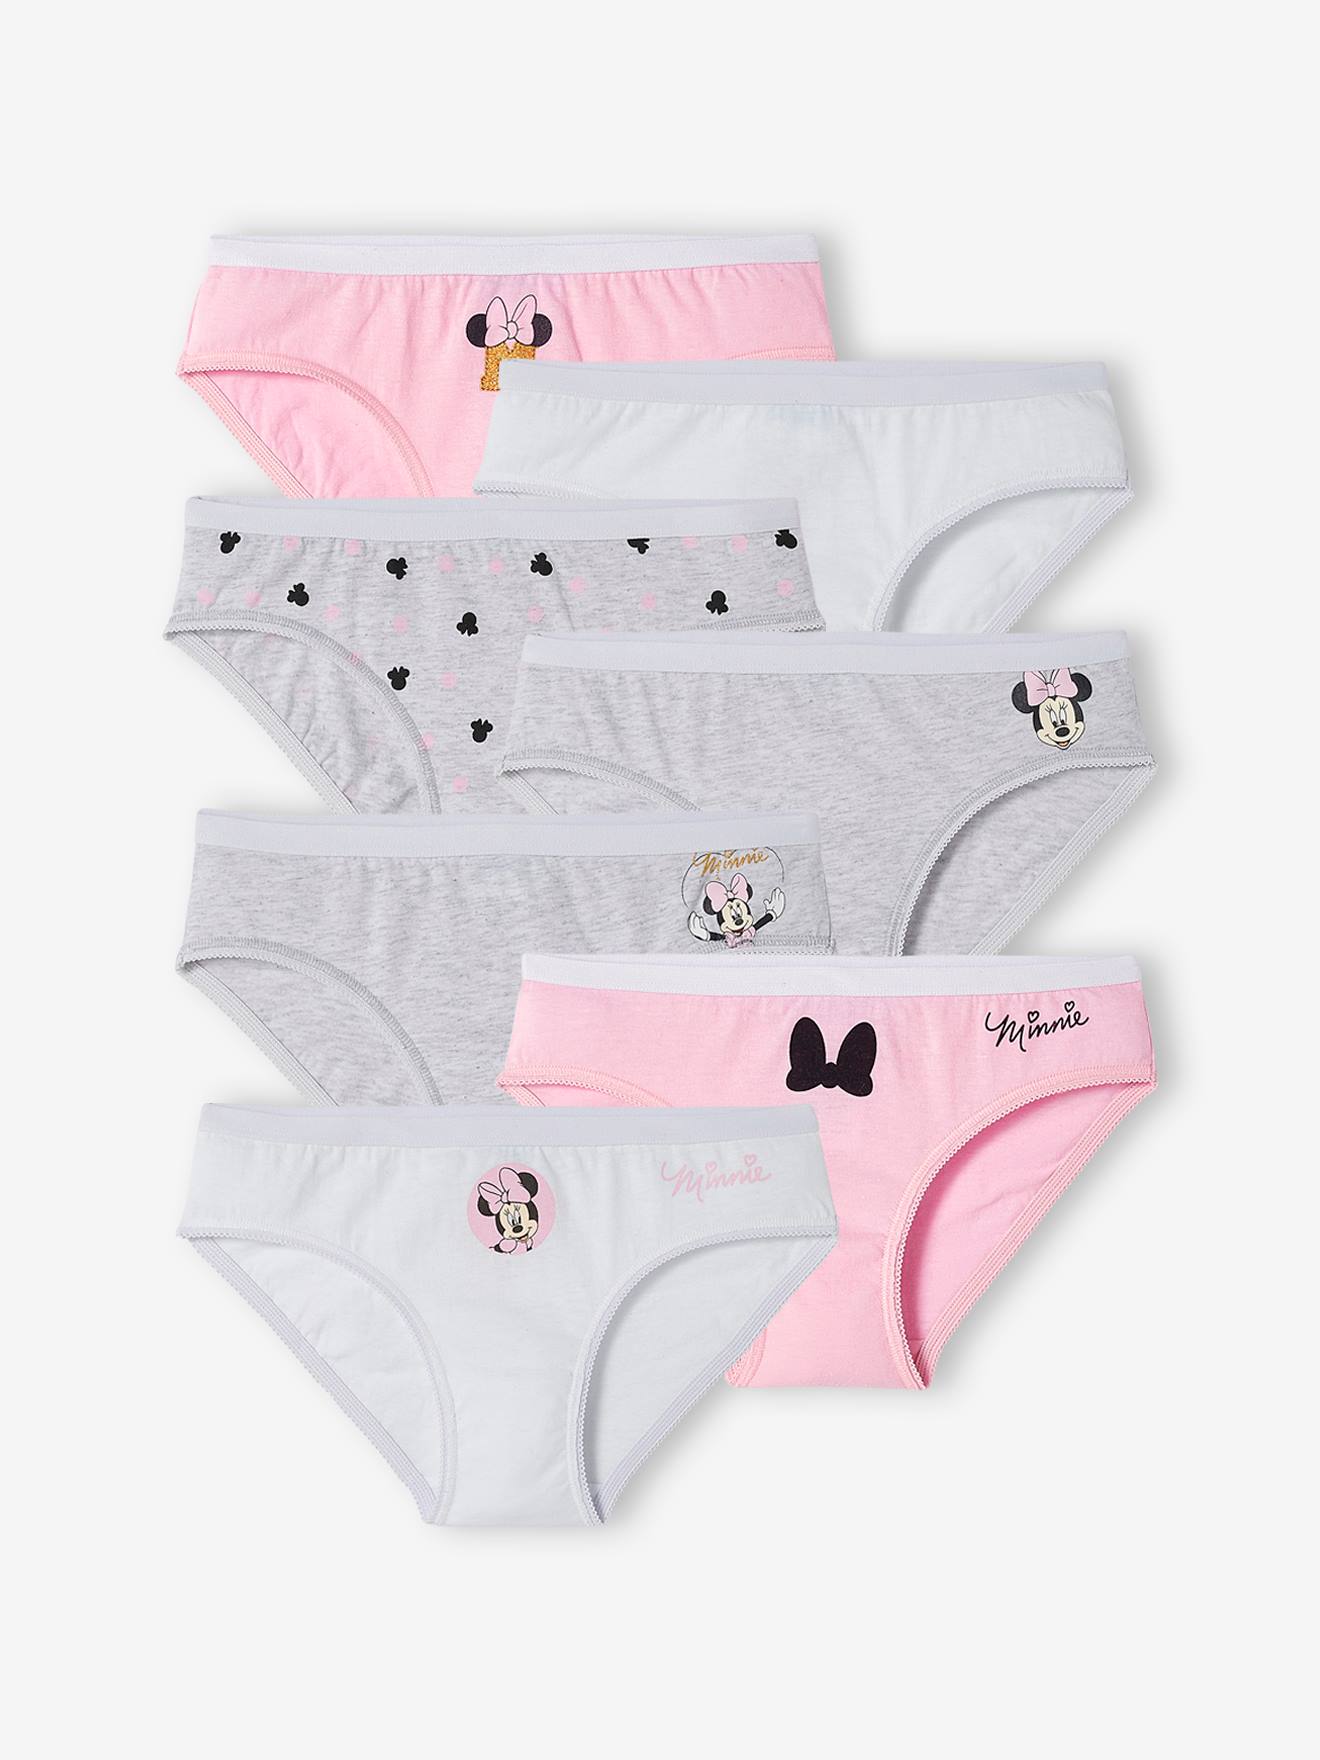 Minnie Mouse underwear from Disney pink 